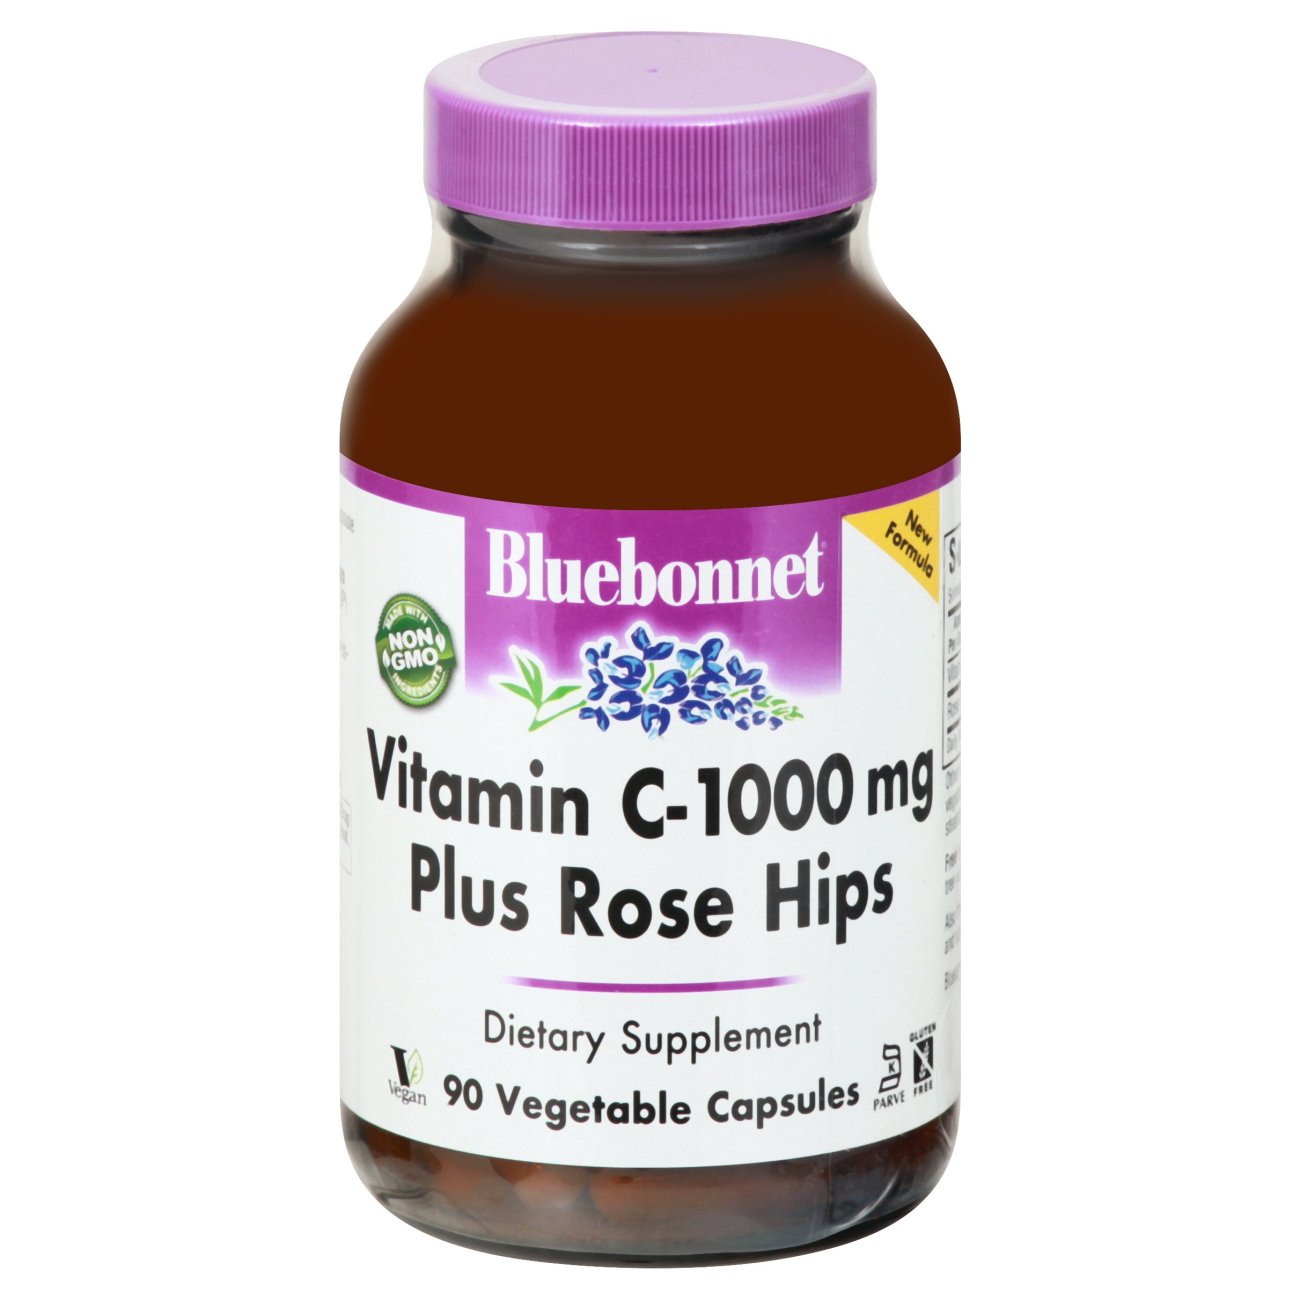 Bluebonnet Vitamin C-1000 mg Rose Hips Veg Capsules - Vitamins & Supplements at